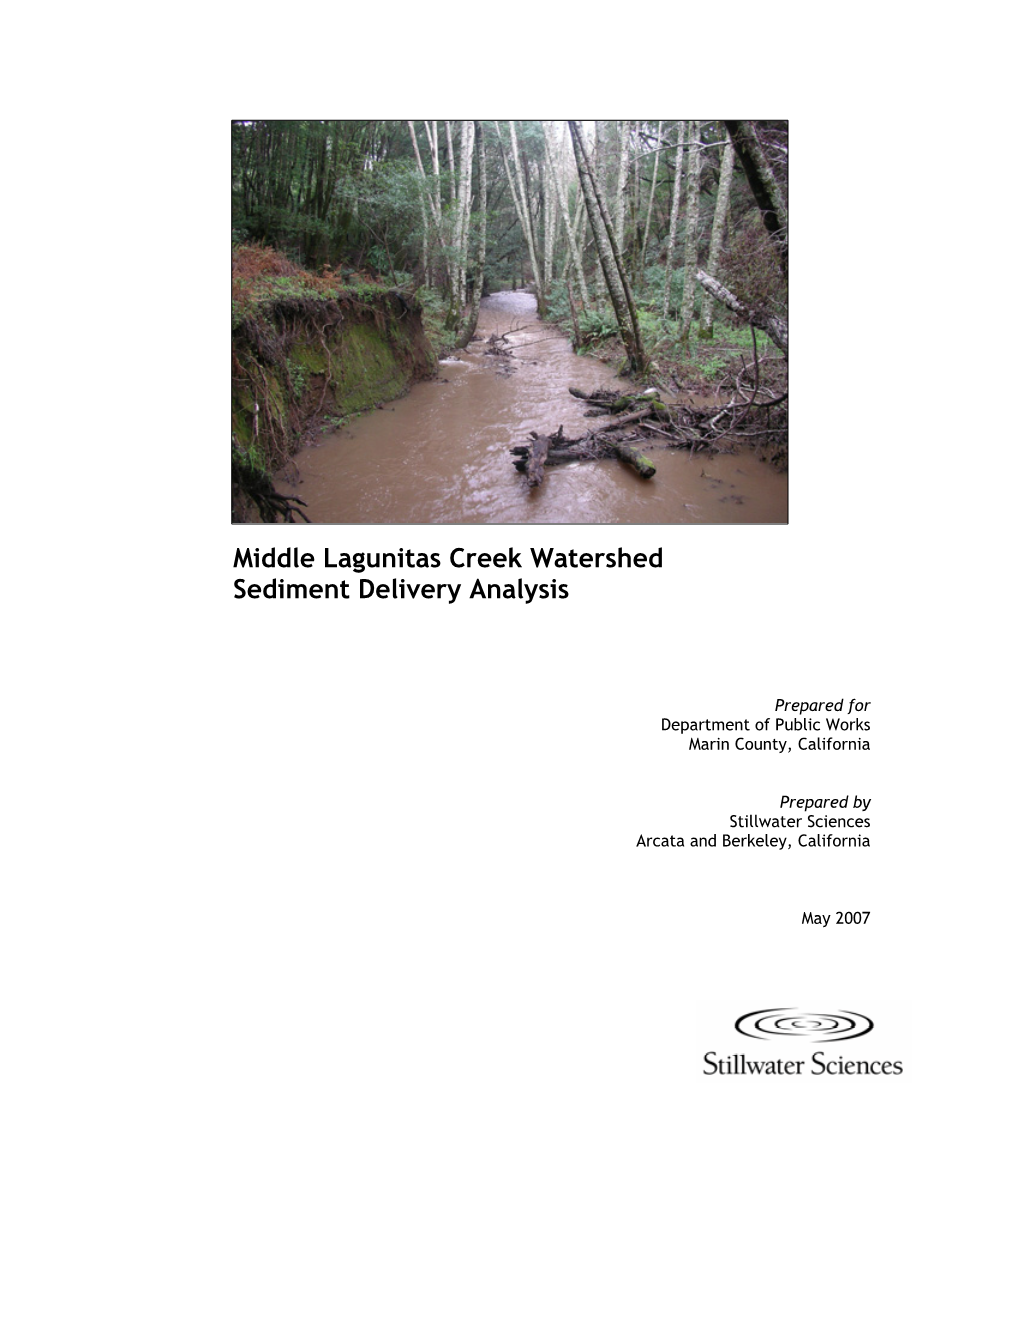 Middle Lagunitas Creek Watershed Sediment Delivery Analysis